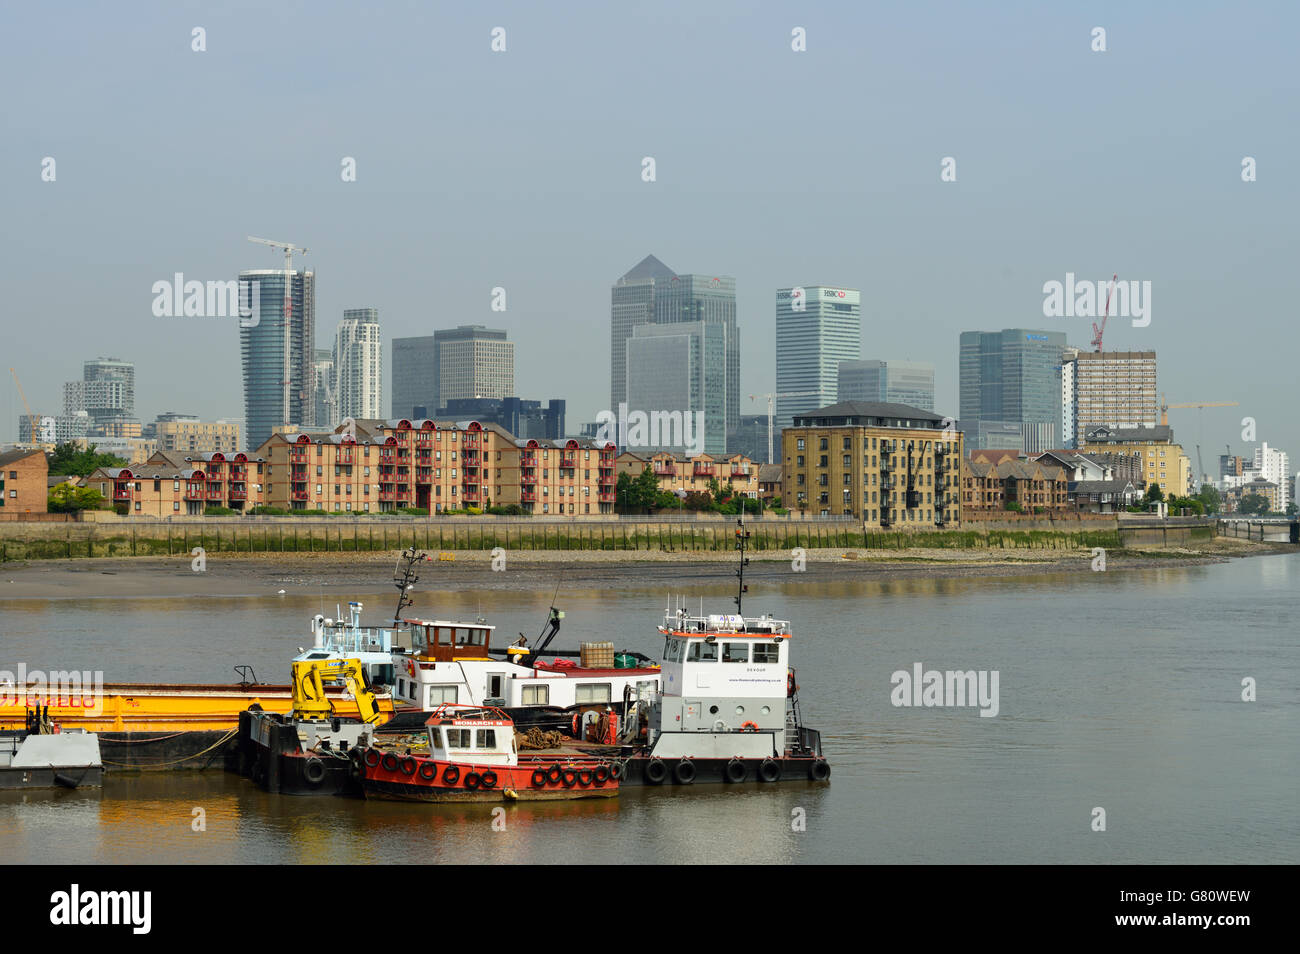 Working River Thames, Canary Wharf, East London, United Kingdom Stock Photo